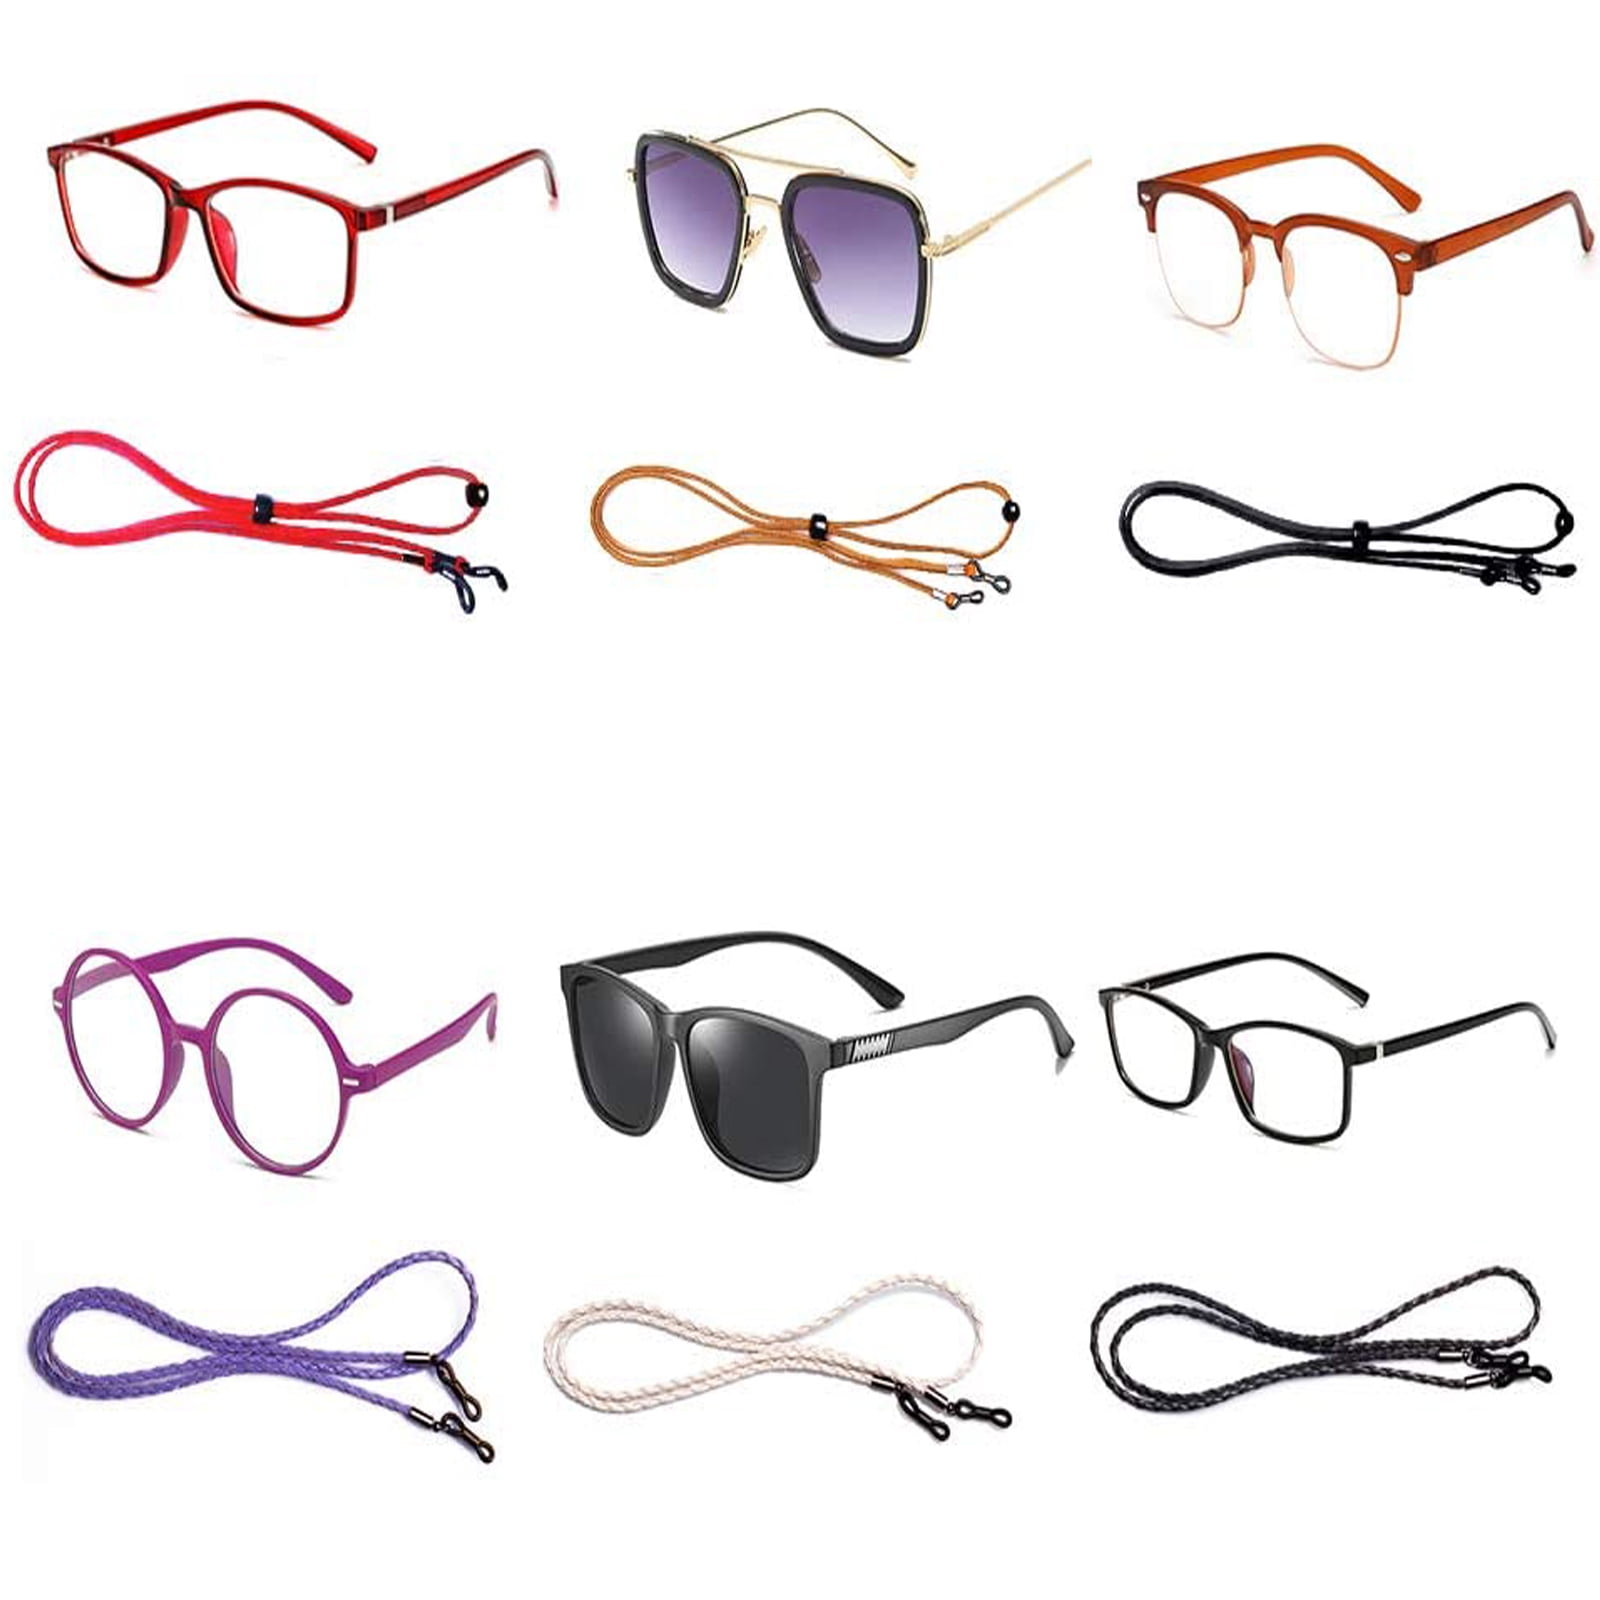 IPOTCH Fashion Eyeglass Chain Sunglasses Holder Strap Eyewear Lanyard 